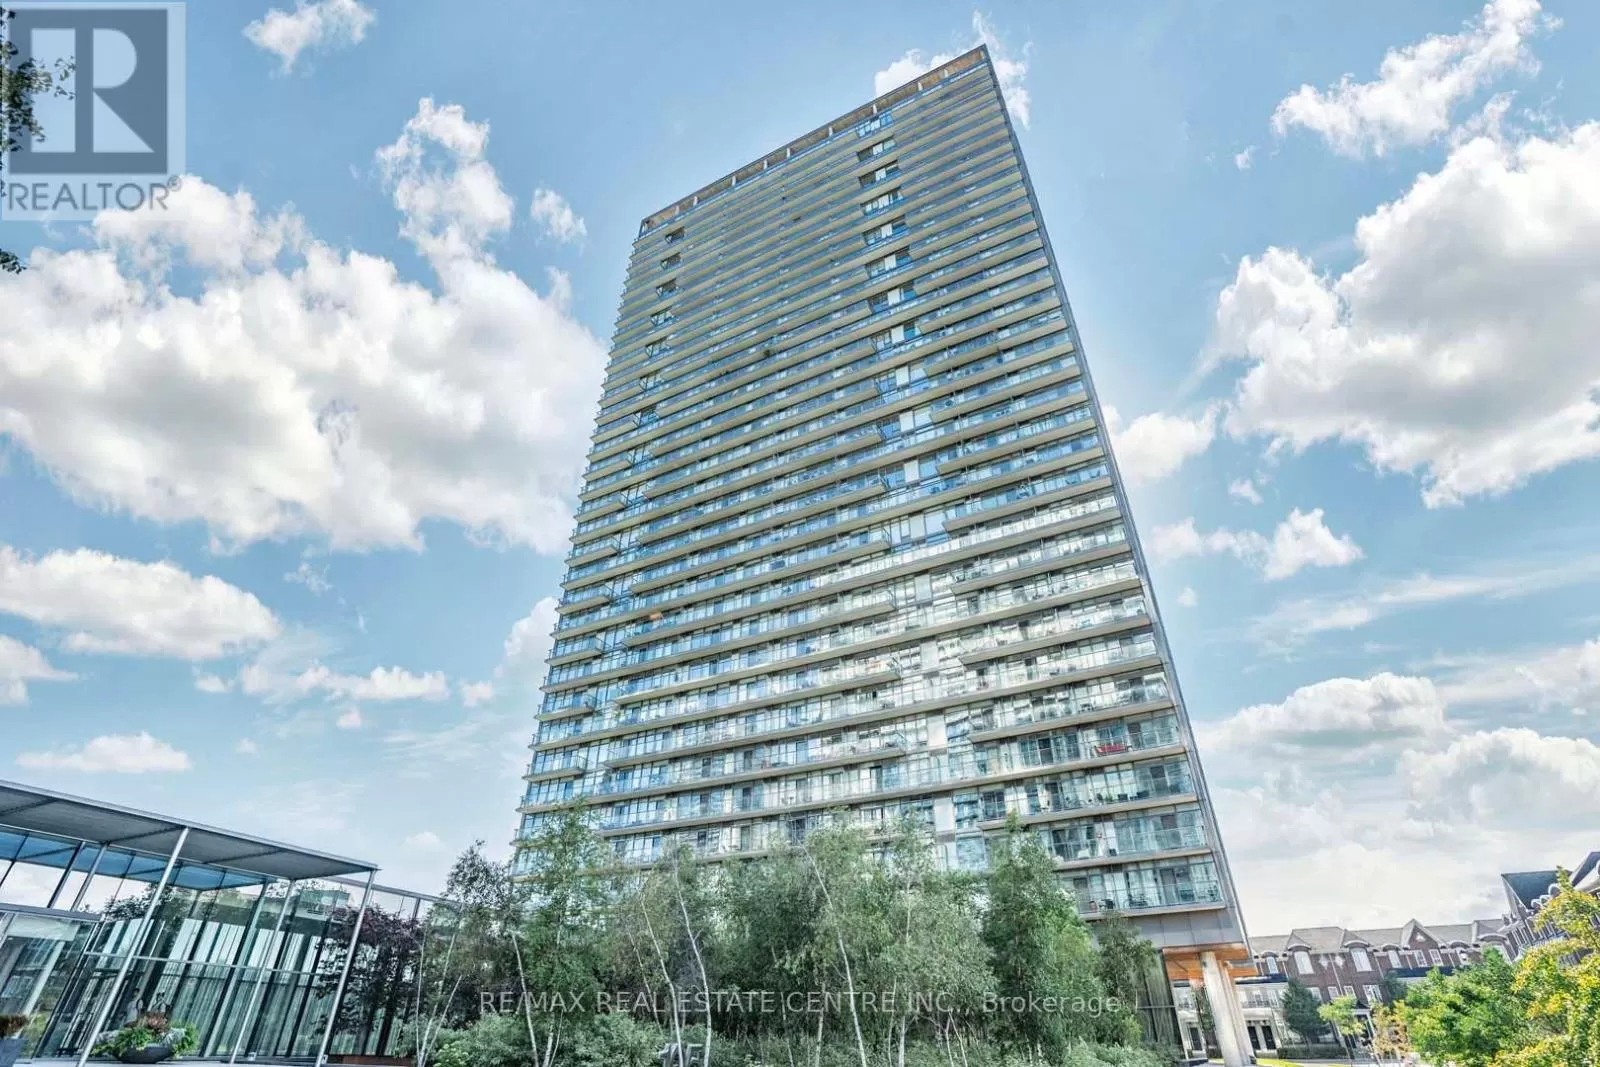 Apartment for rent: 415 - 105 The Queensway Avenue, Toronto, Ontario M6S 5B5